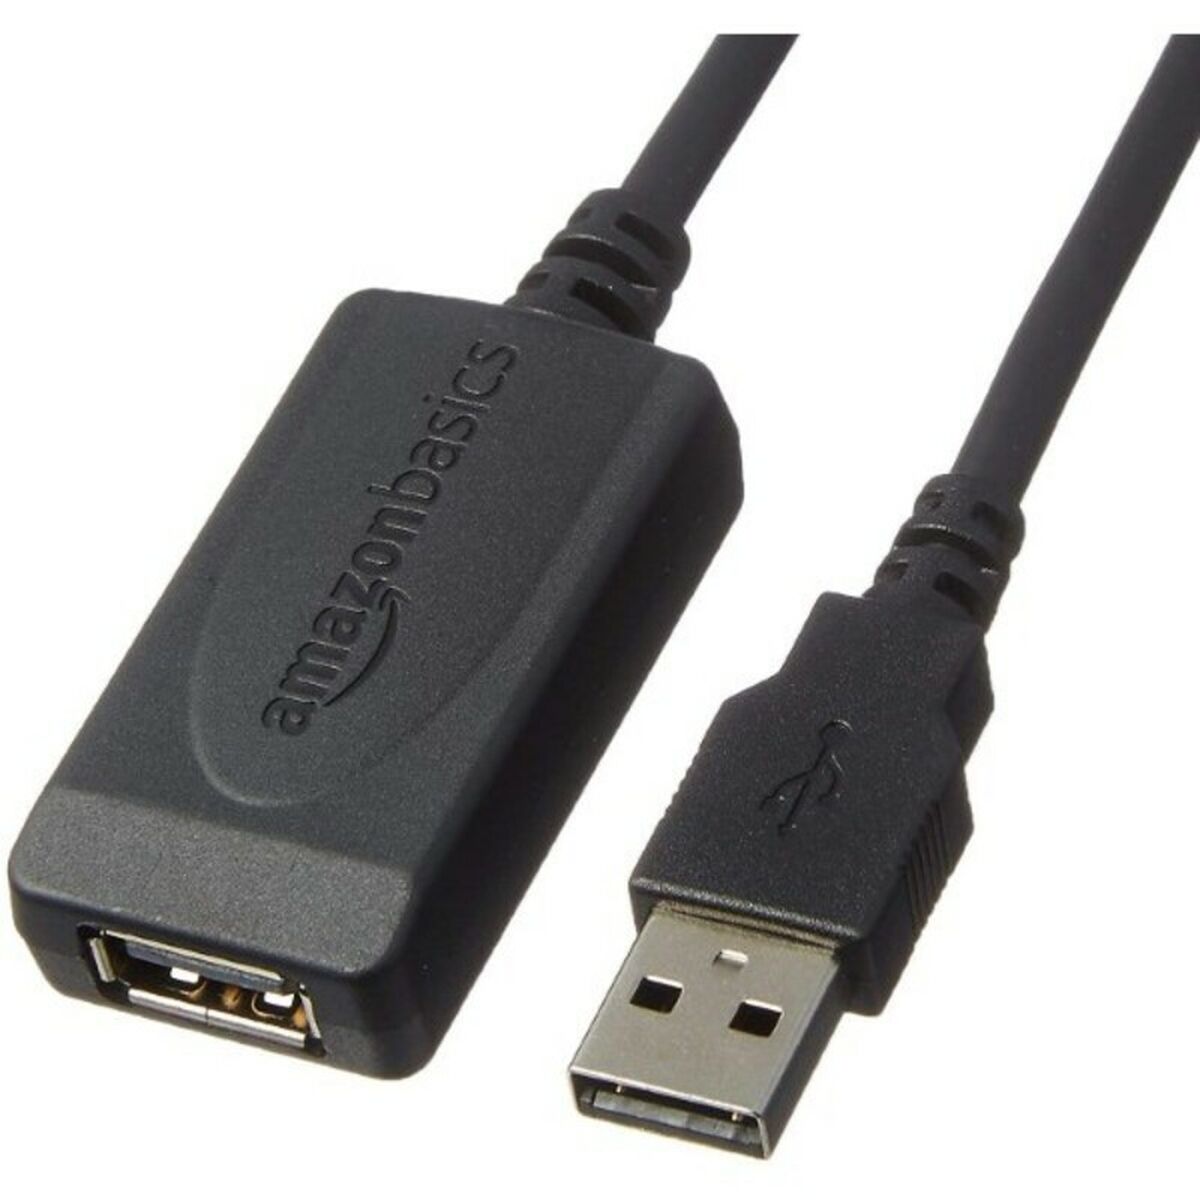 USB Cable 480 Mbps Male Plug/Socket 9,75 m Black (Refurbished A+)